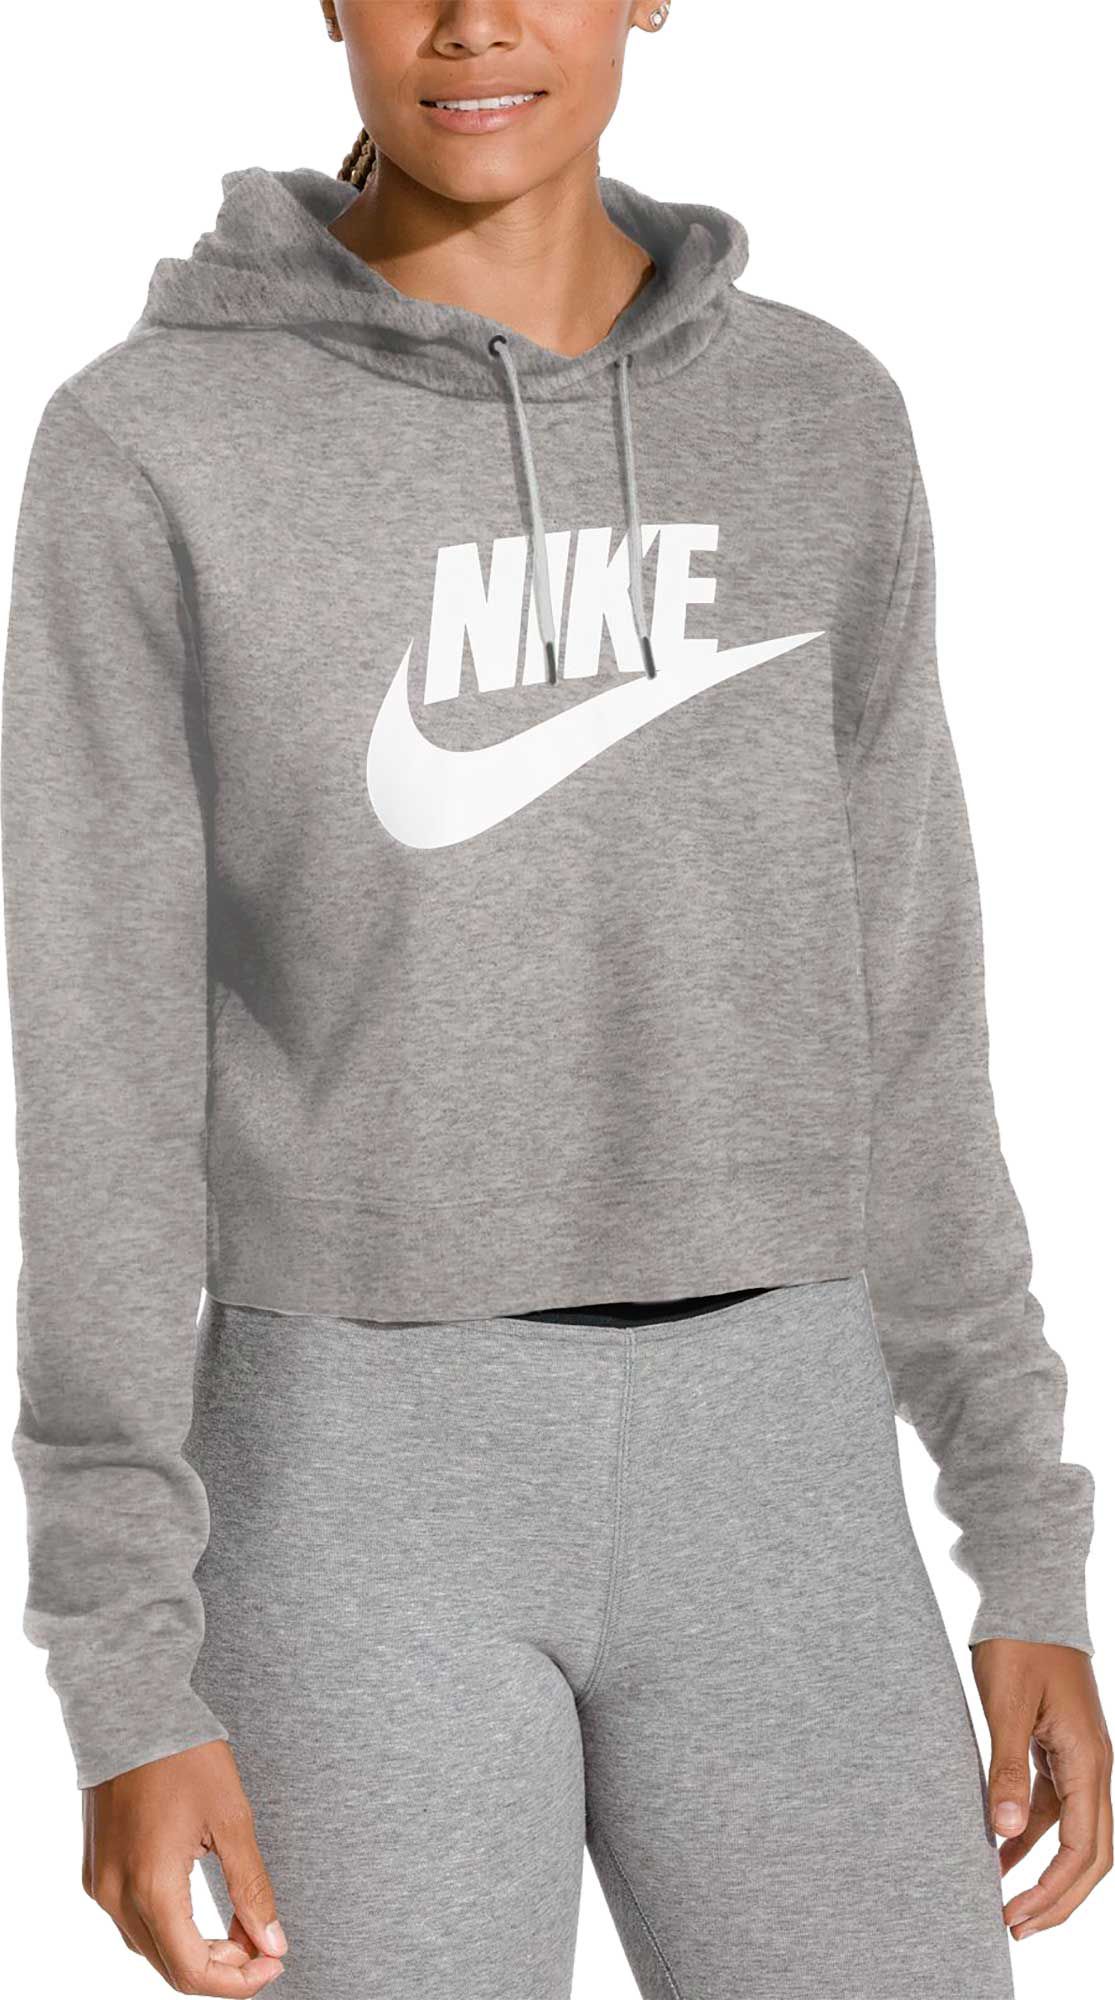 Women's Hoodies & Sweatshirts: Nike & More | Best Price Guarantee at DICK’S